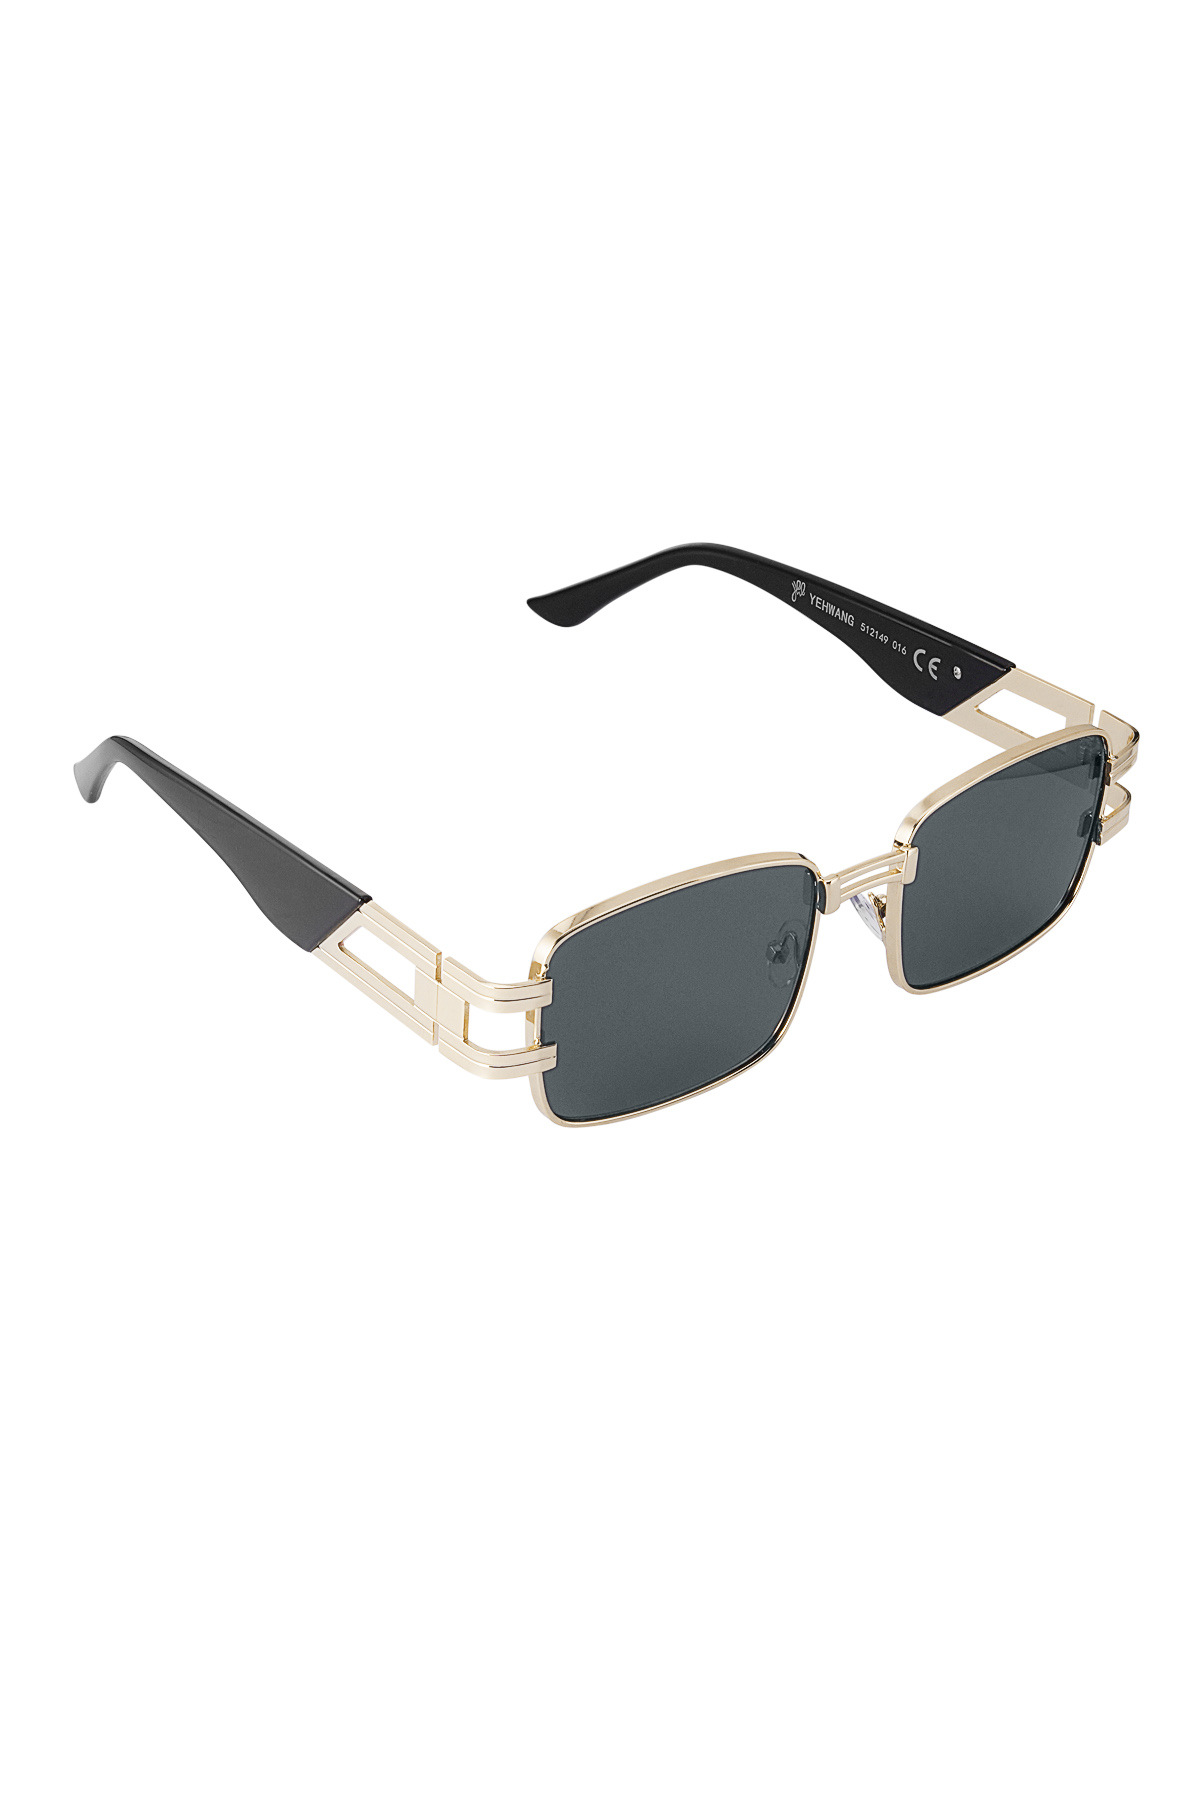 Sunglasses simple metal essential - black gold